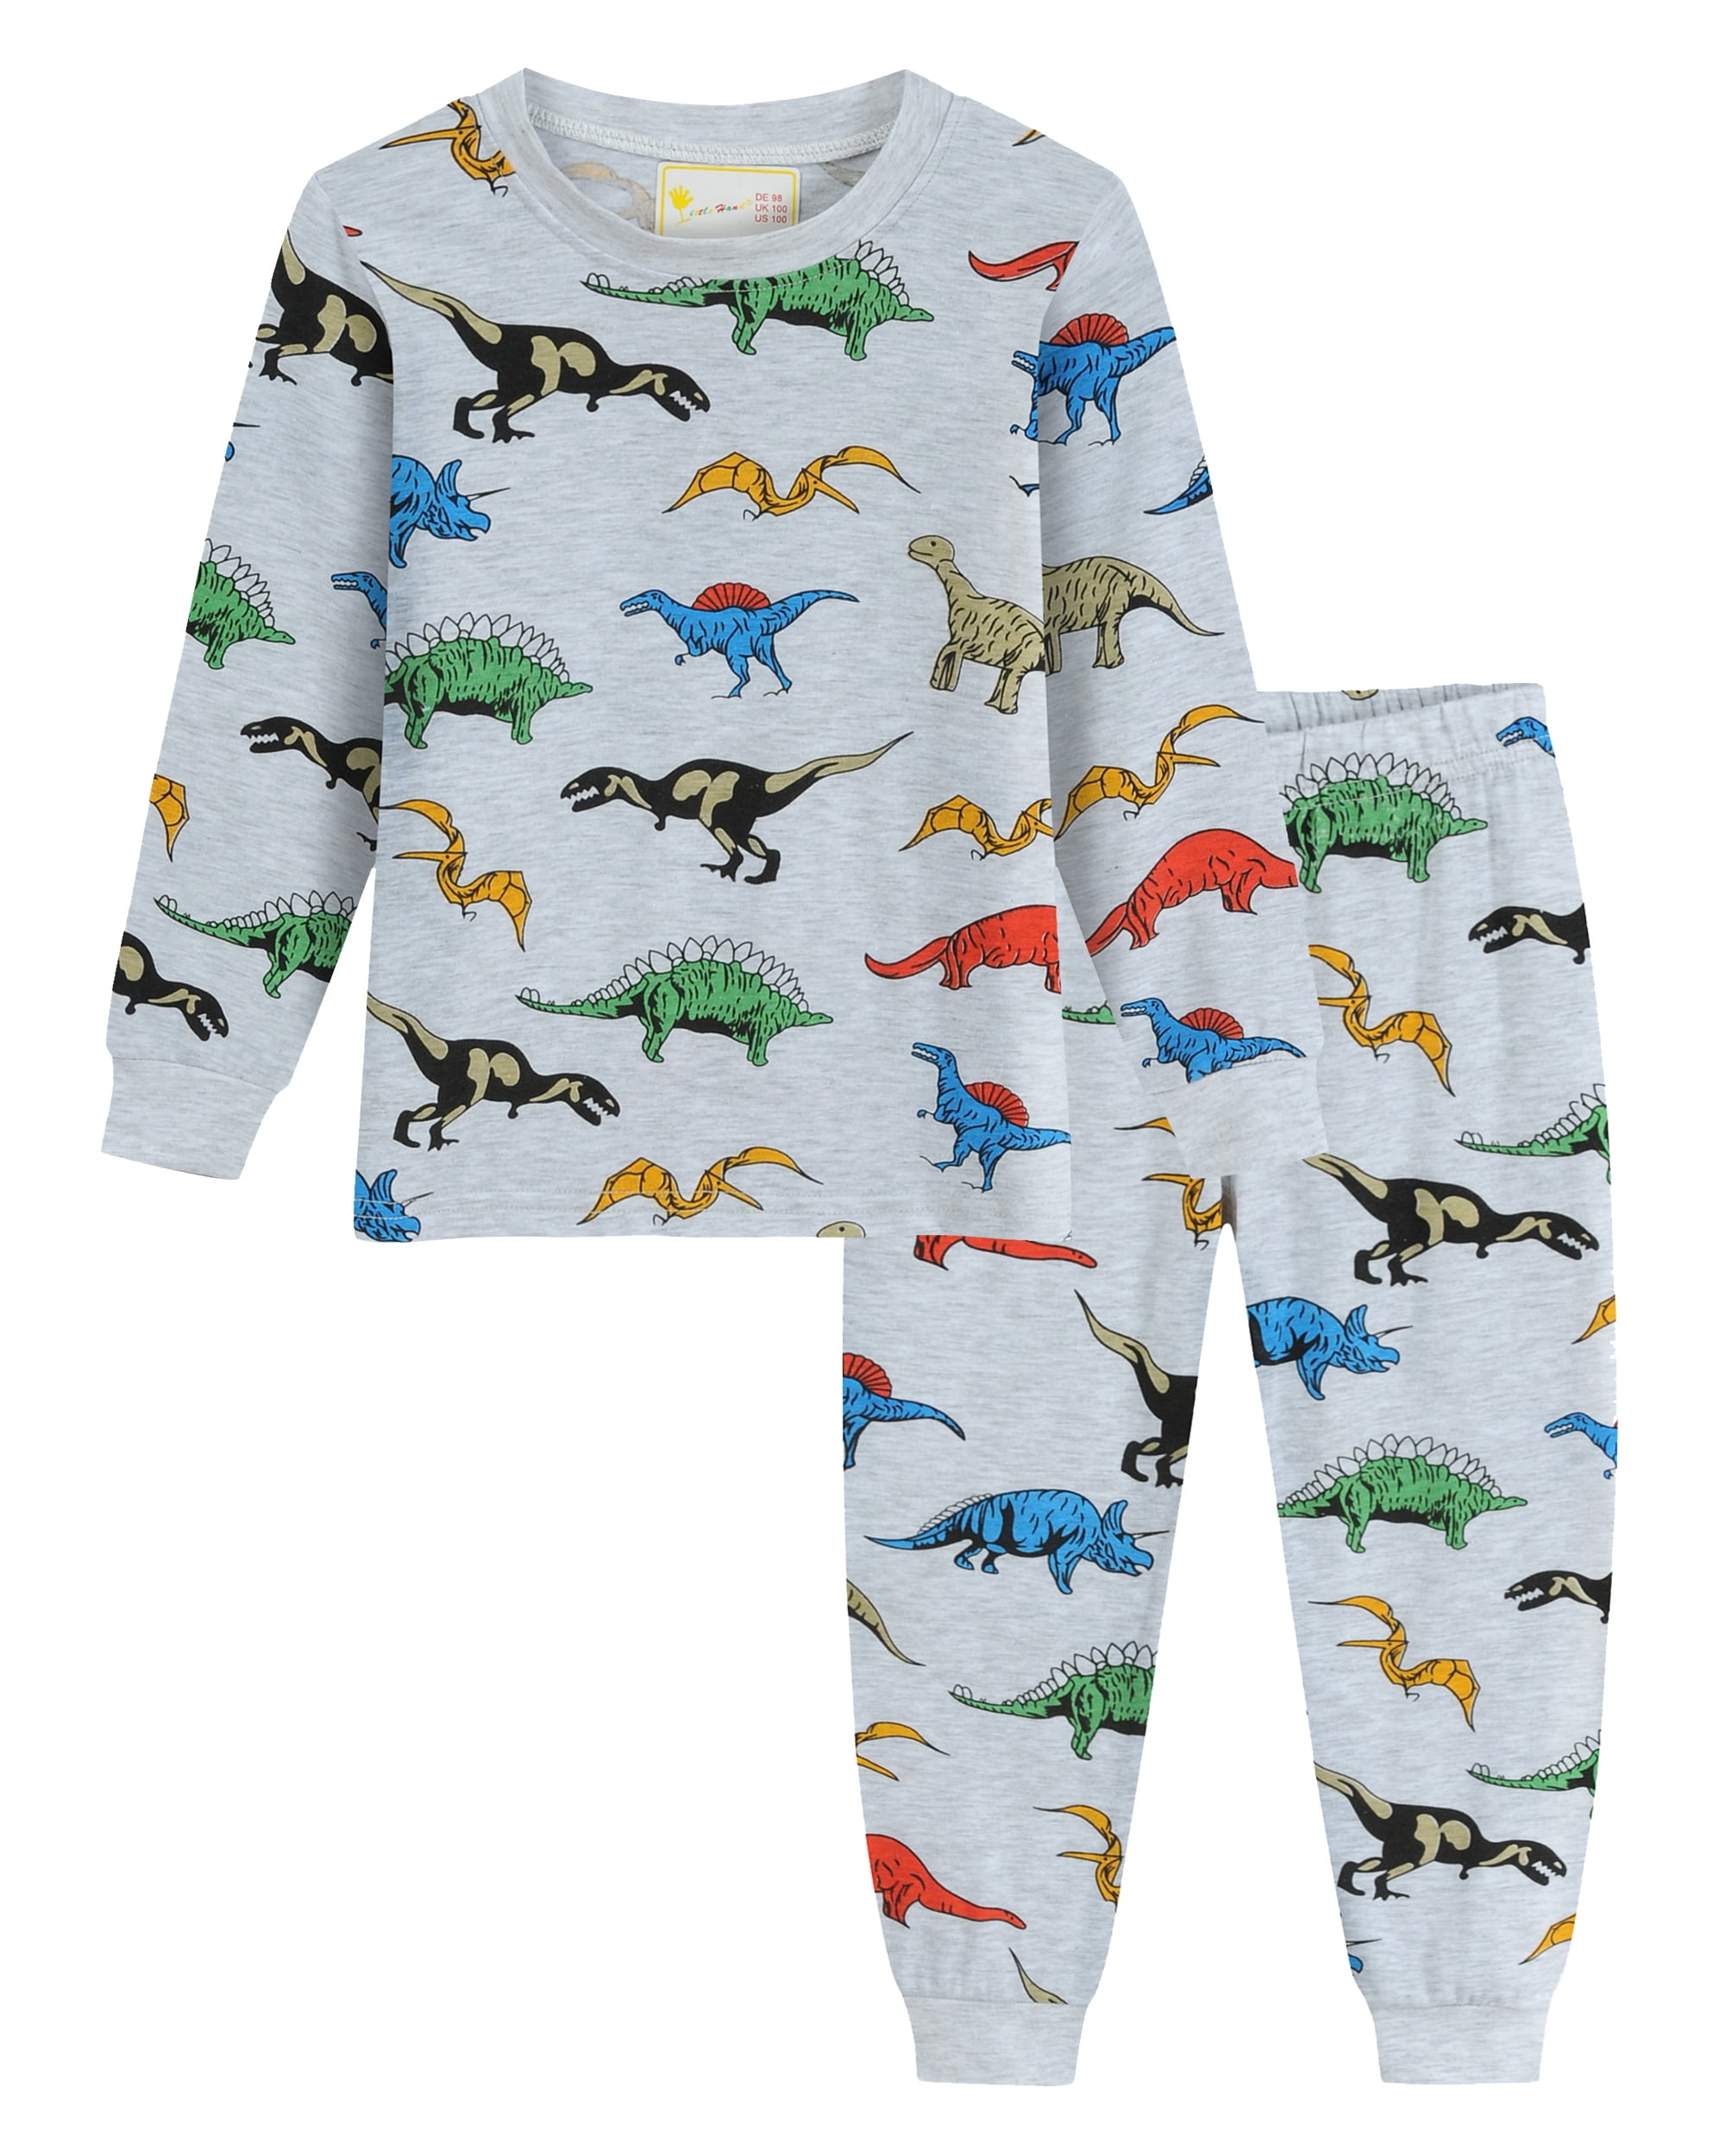 Size 2-7 Years Boys Pajamas Long Sleeve Toddler Clothes Set Dinosaur 100% Cotton Little Kids Pjs Sleepwear